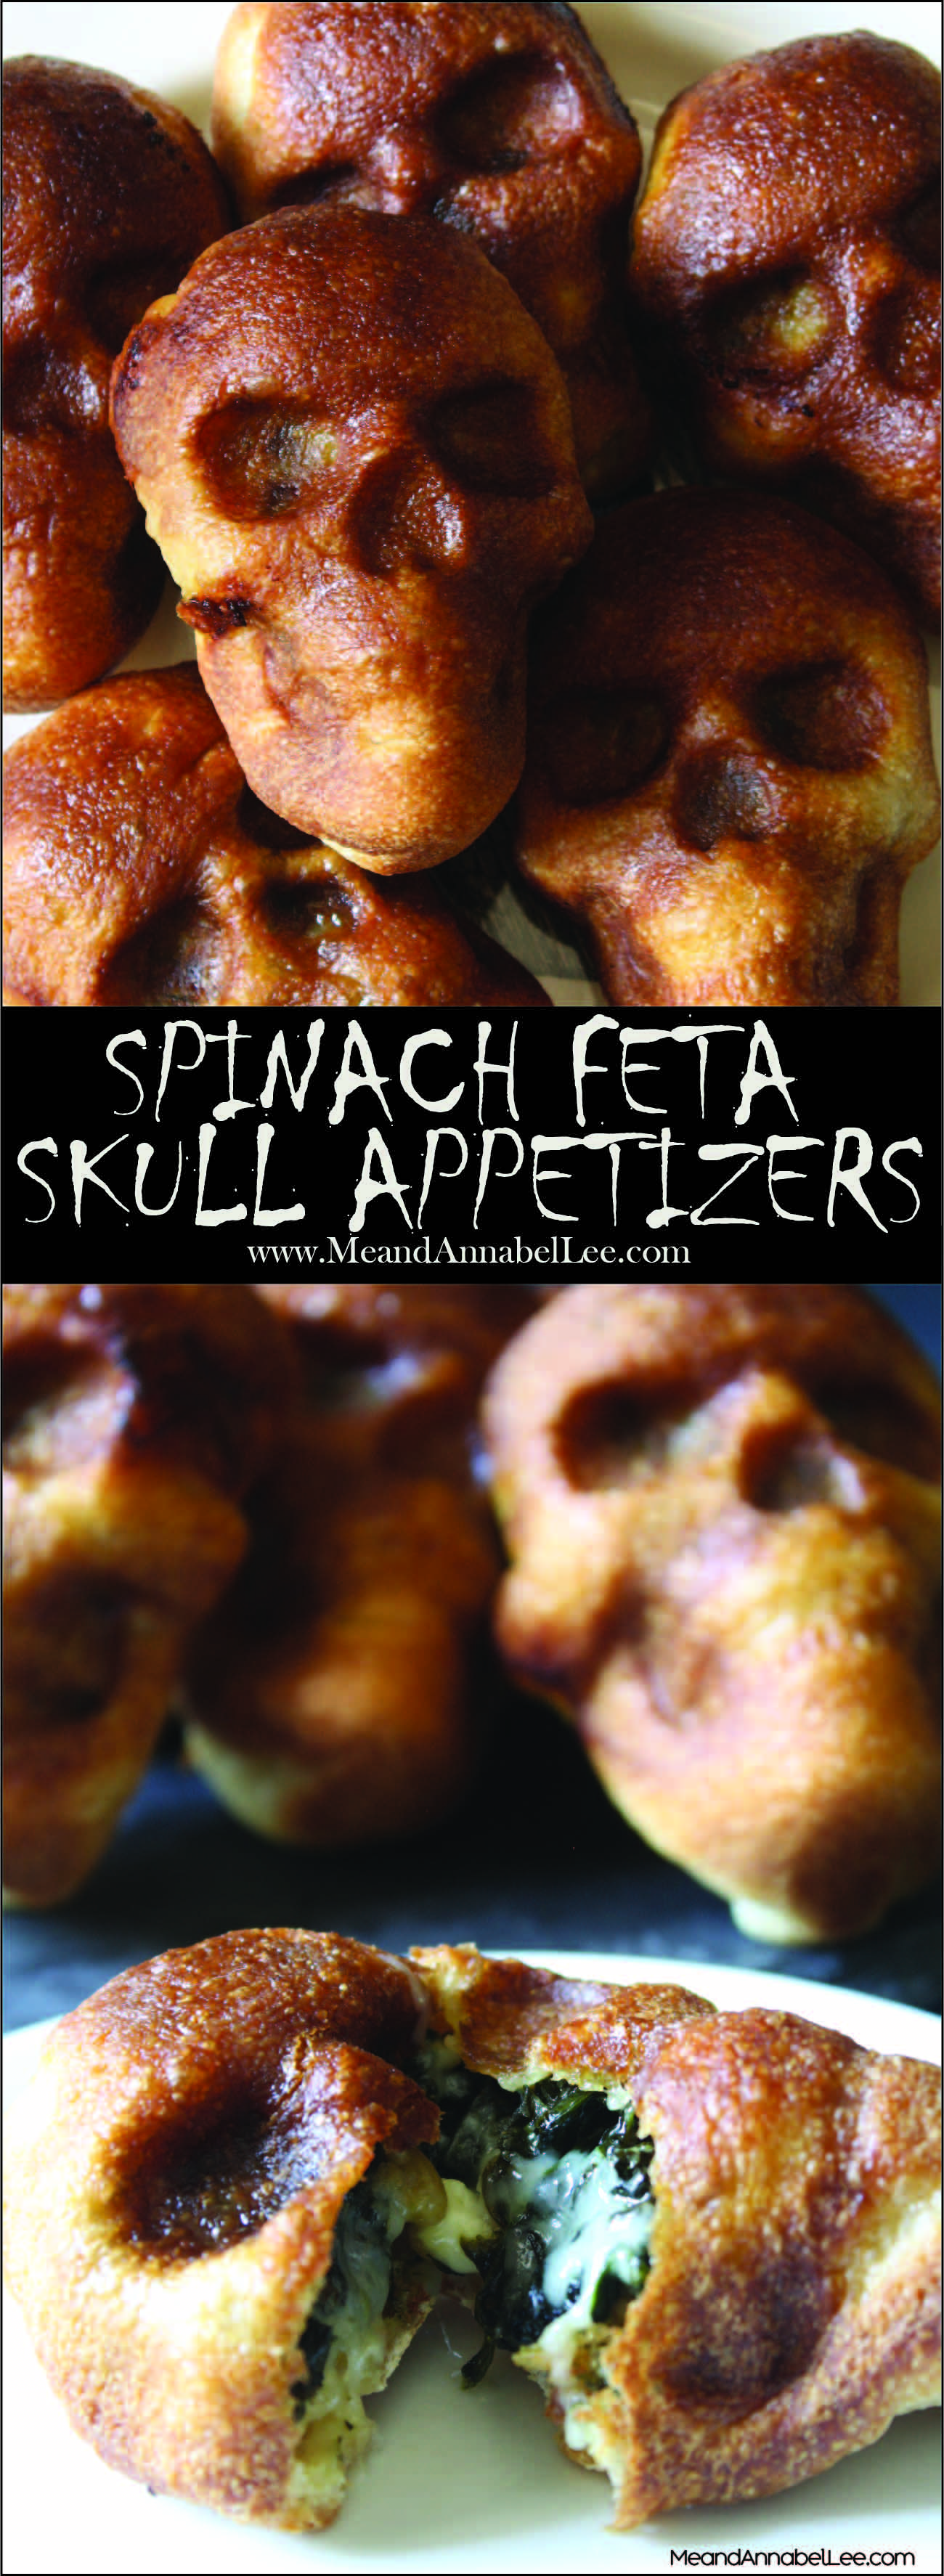 Spinach Feta Stuffed Skull Appetizers - Halloween Treats - Gothic Baking - www.MeandAnnabelLee